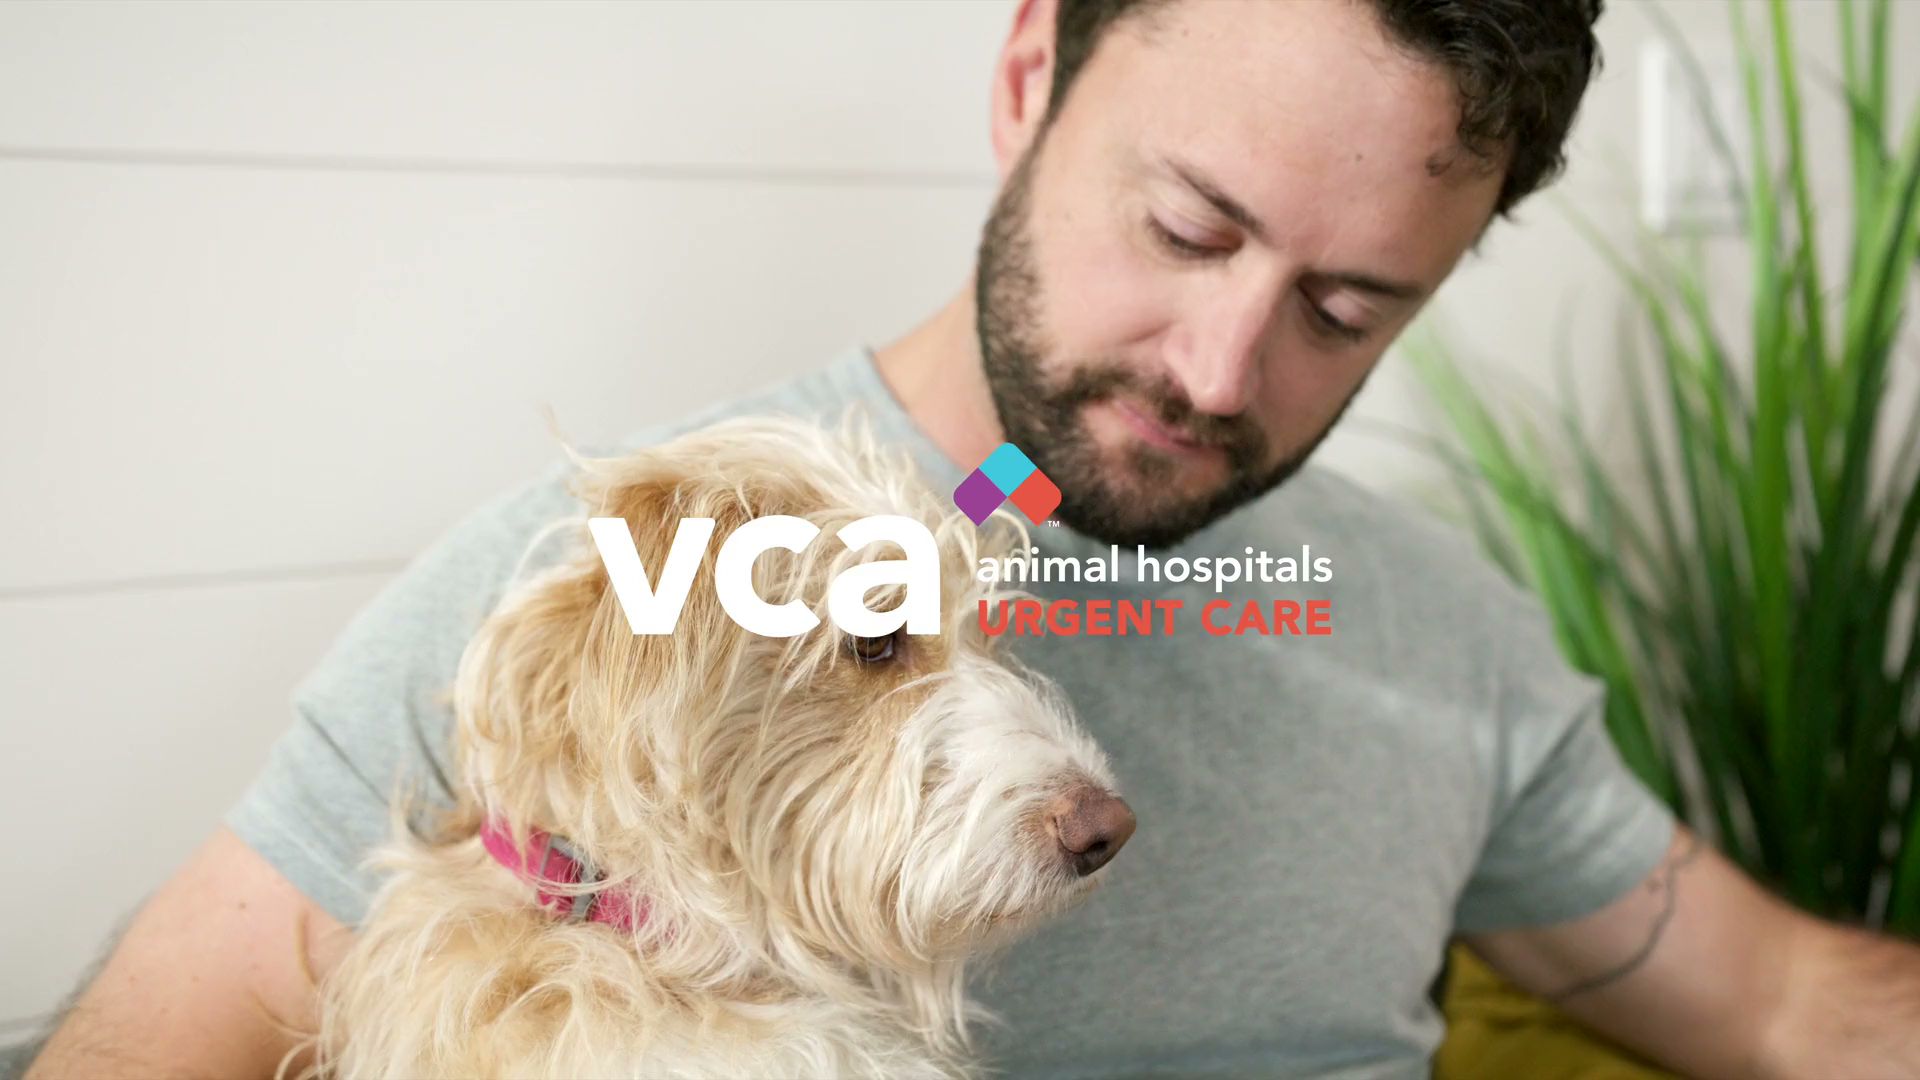 VCA Animal Hospitals Urgent Care - South Austin